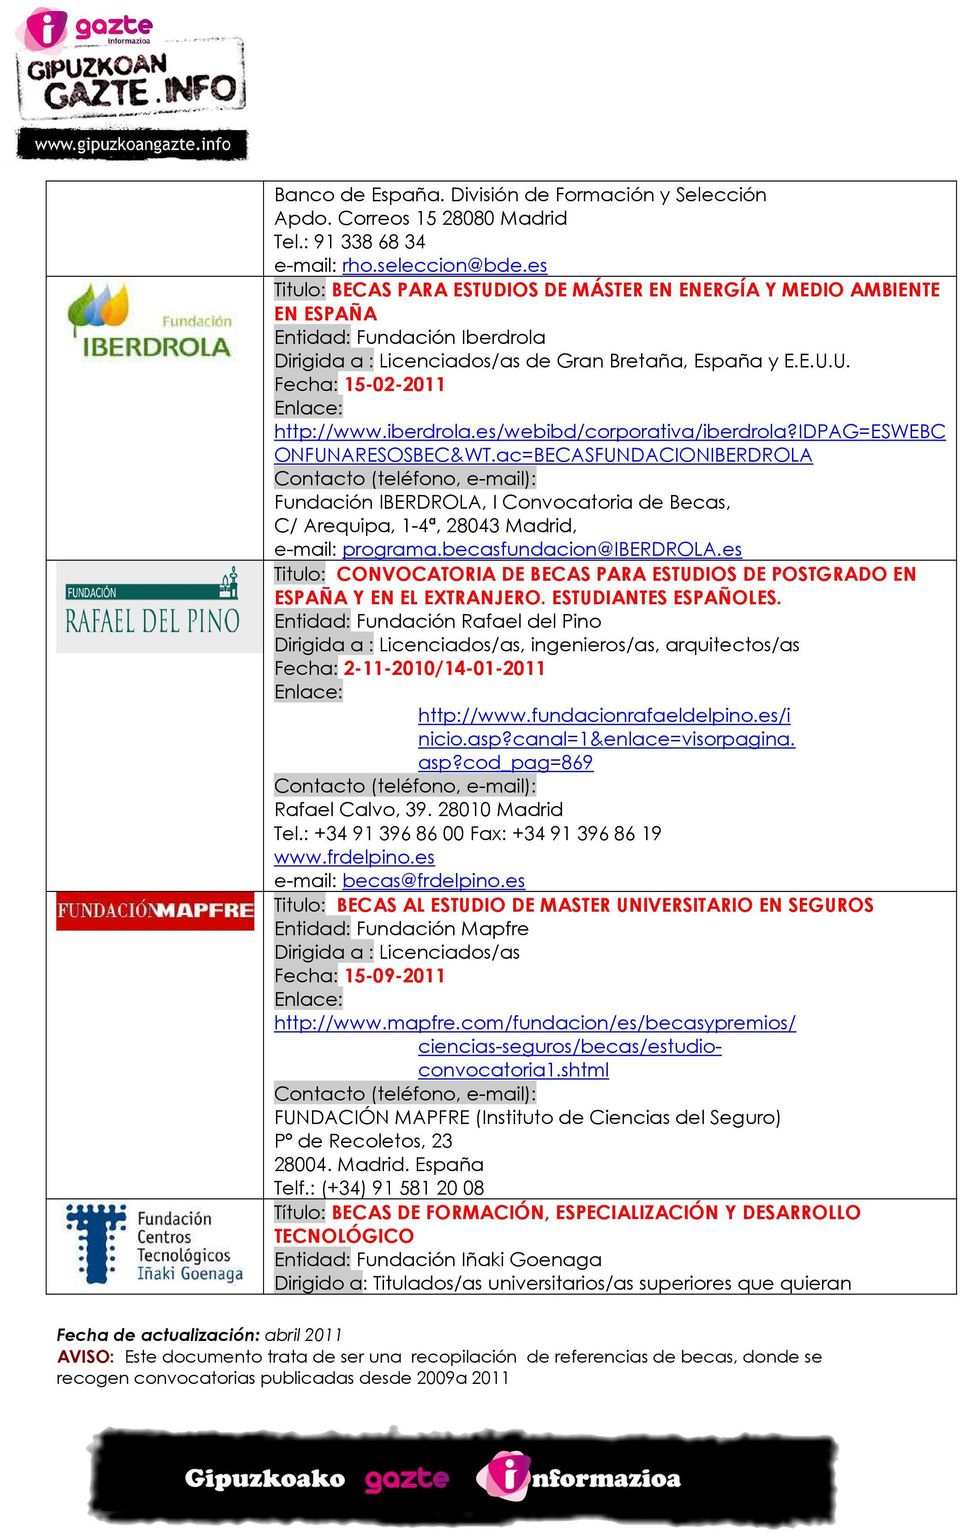 iberdrola.es/webibd/corporativa/iberdrola?idpag=eswebc ONFUNARESOSBEC&WT.ac=BECASFUNDACIONIBERDROLA Fundación IBERDROLA, I Convocatoria de Becas, C/ Arequipa, 1-4ª, 28043 Madrid, e-mail: programa.